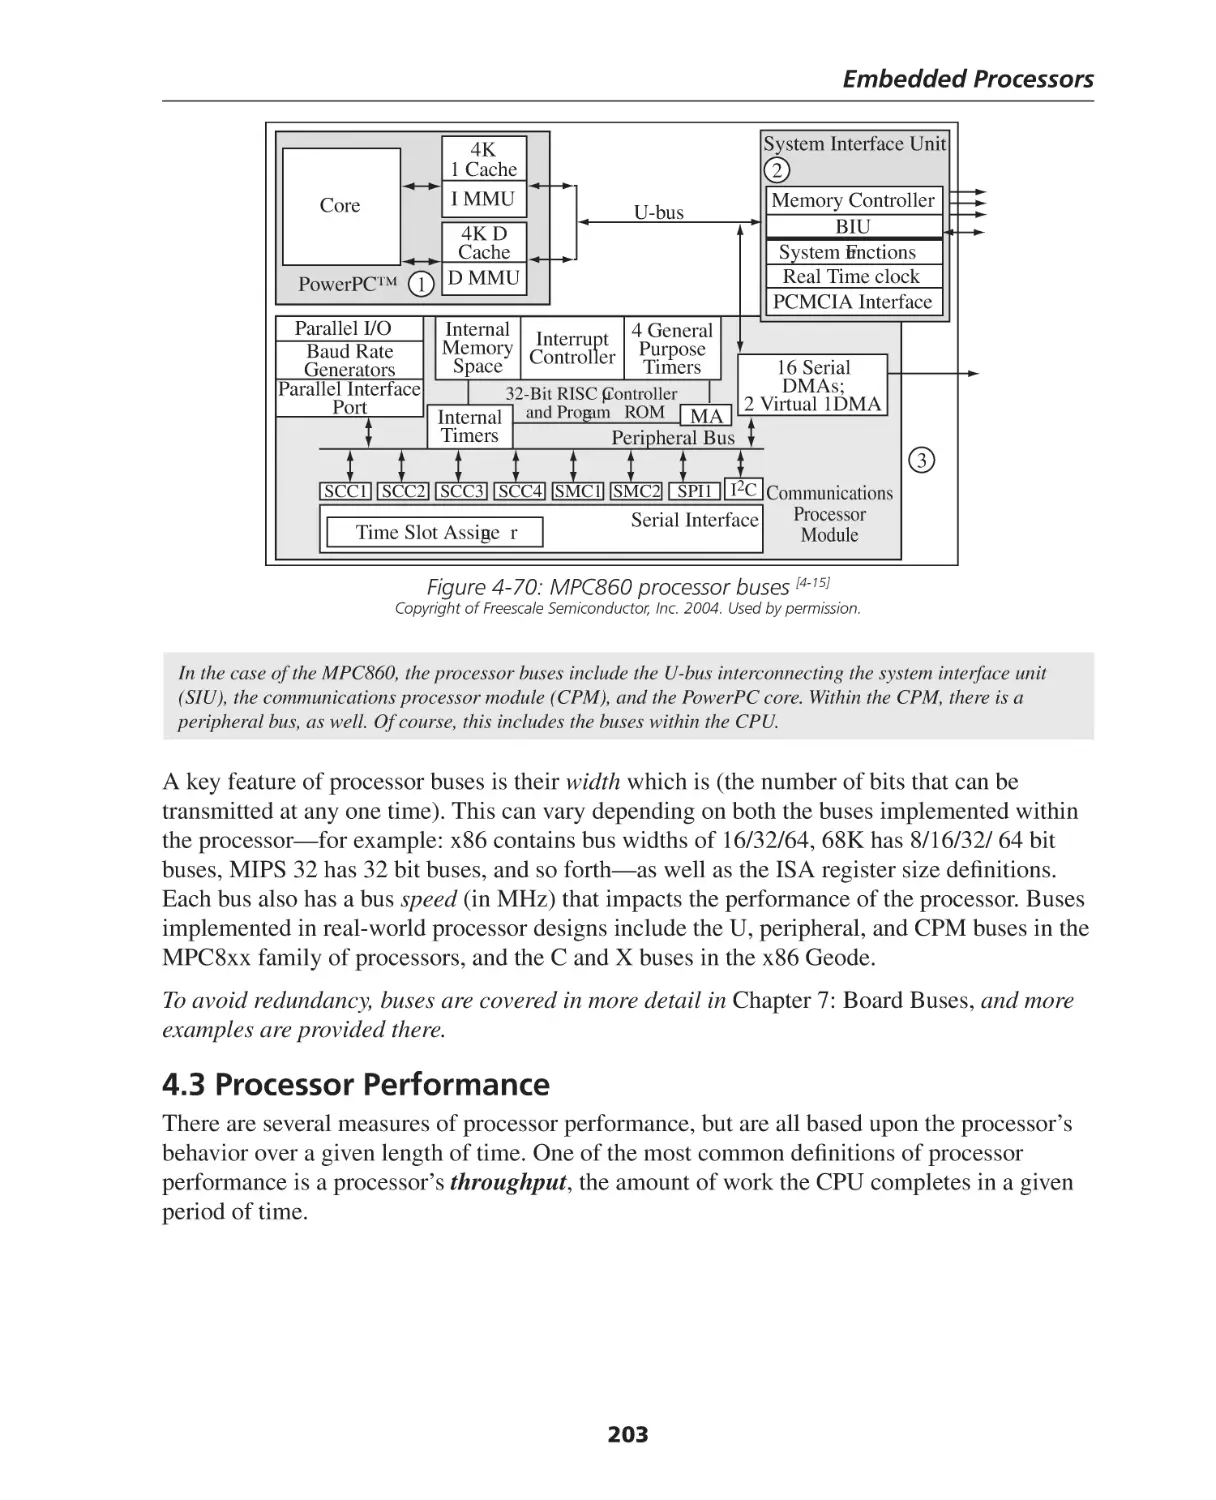 4.3 Processor Performance